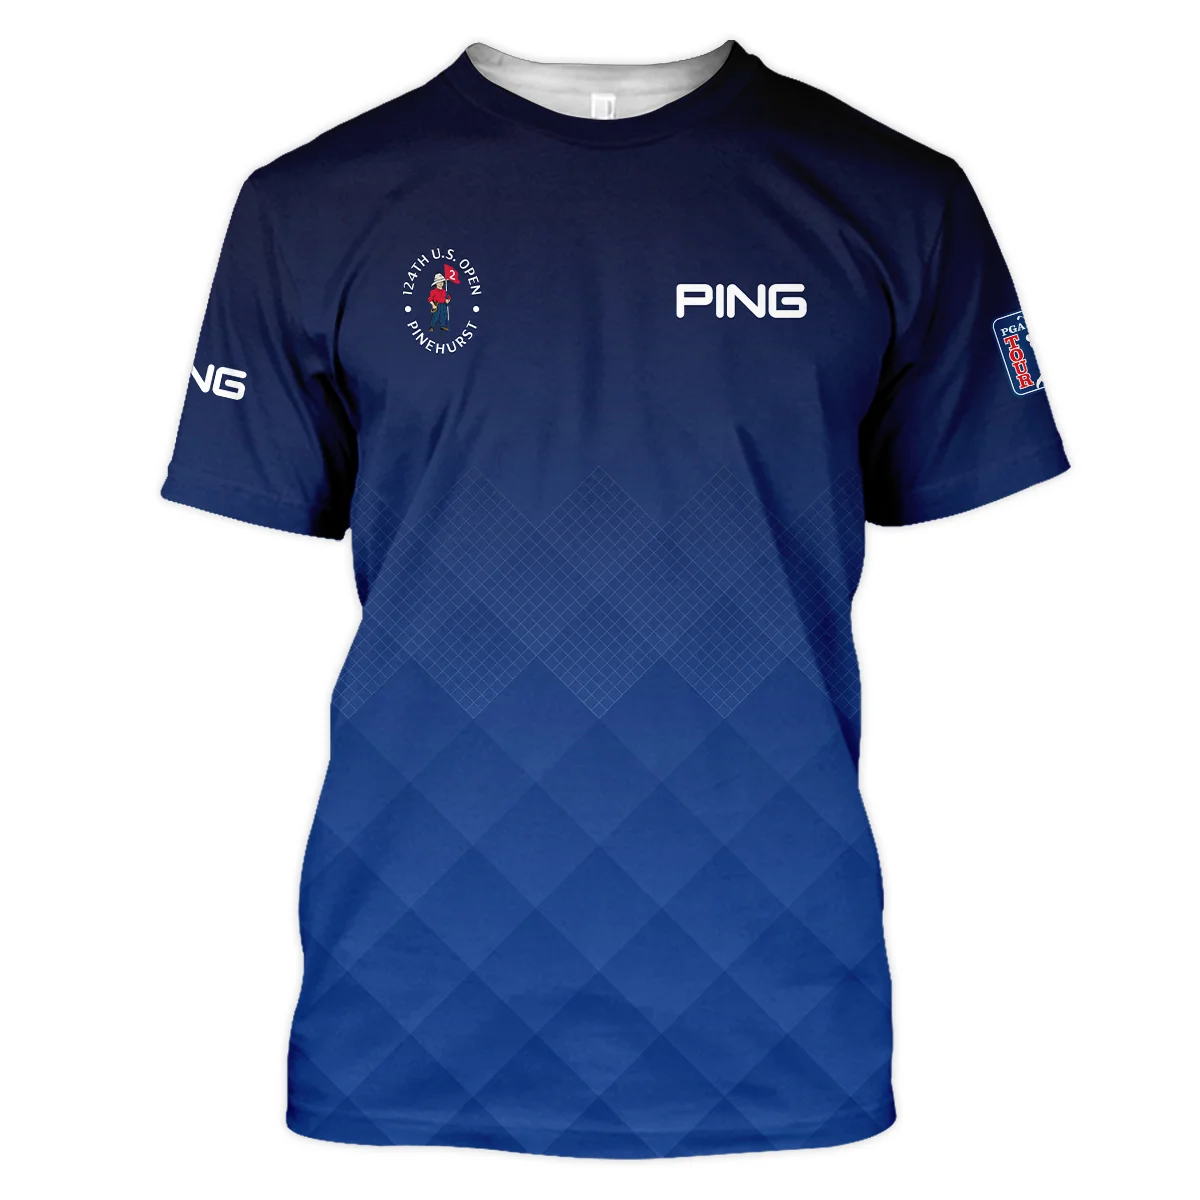 124th U.S. Open Pinehurst Ping Dark Blue Gradient Stripes Pattern Unisex T-Shirt Style Classic T-Shirt